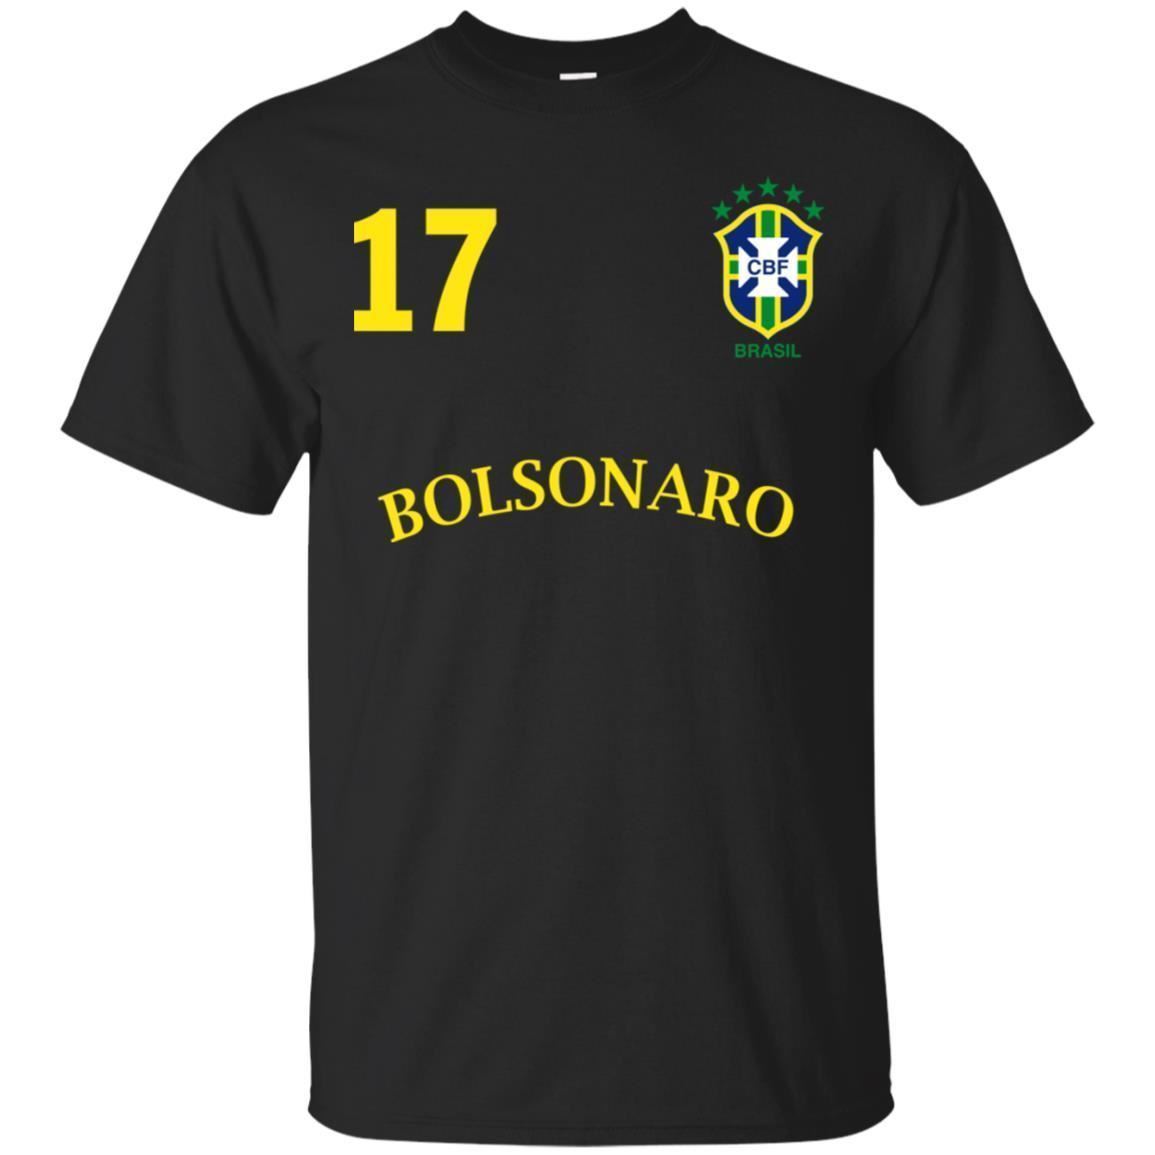 Primary image for Number on BACK VOTE 17 Bolsonaro Presidente 2018 T-shirt Black Navy S-5XL